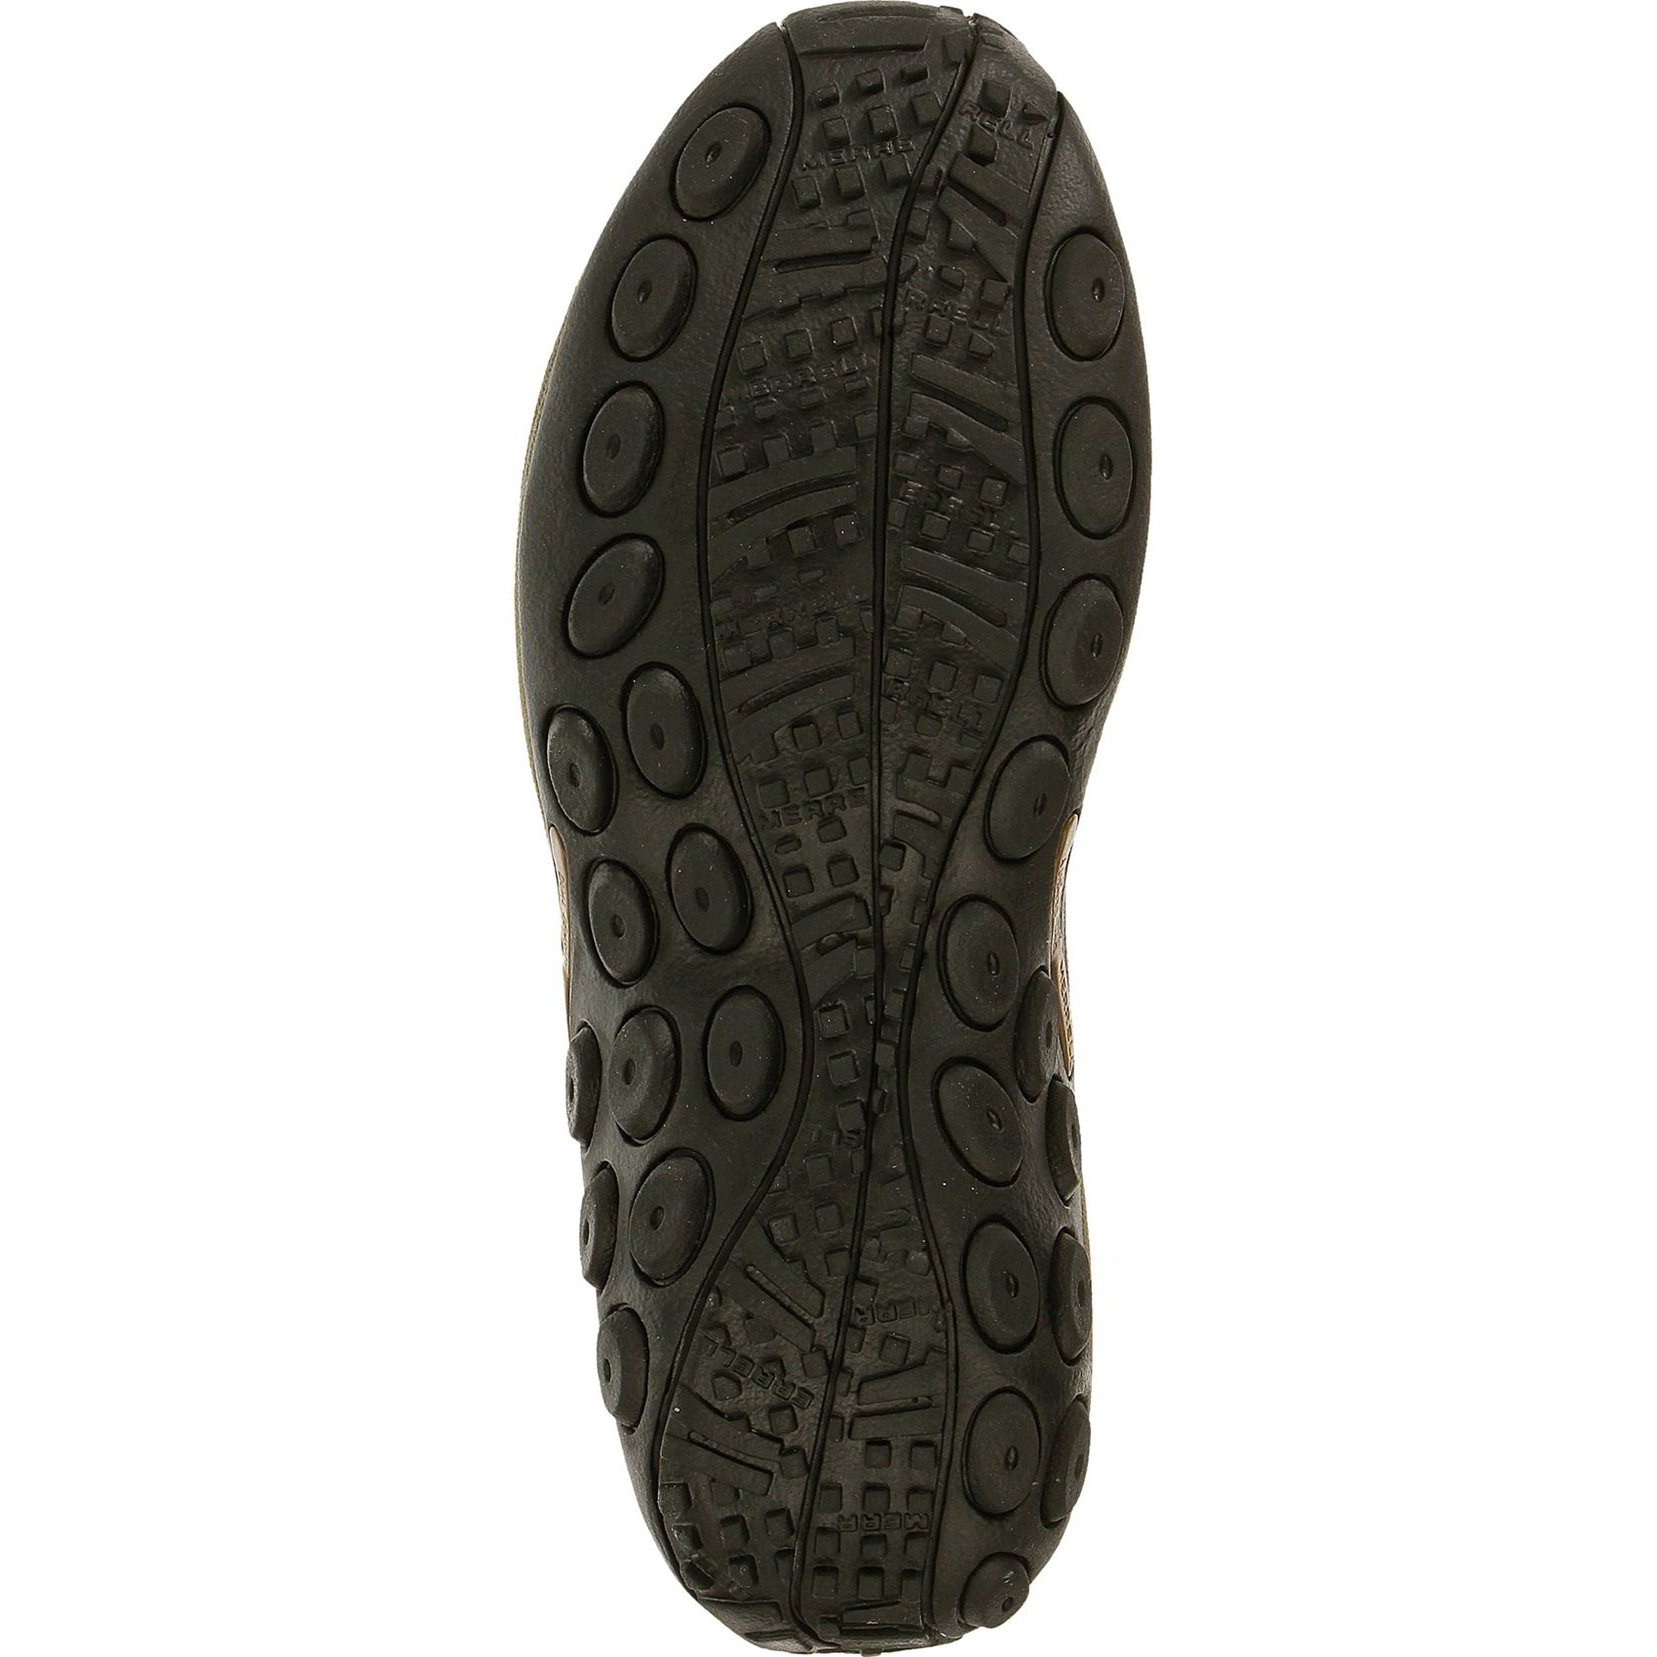 Merrell Mens Jungle Moc Leather Slip On Shoes - Black Slate Brown 2951